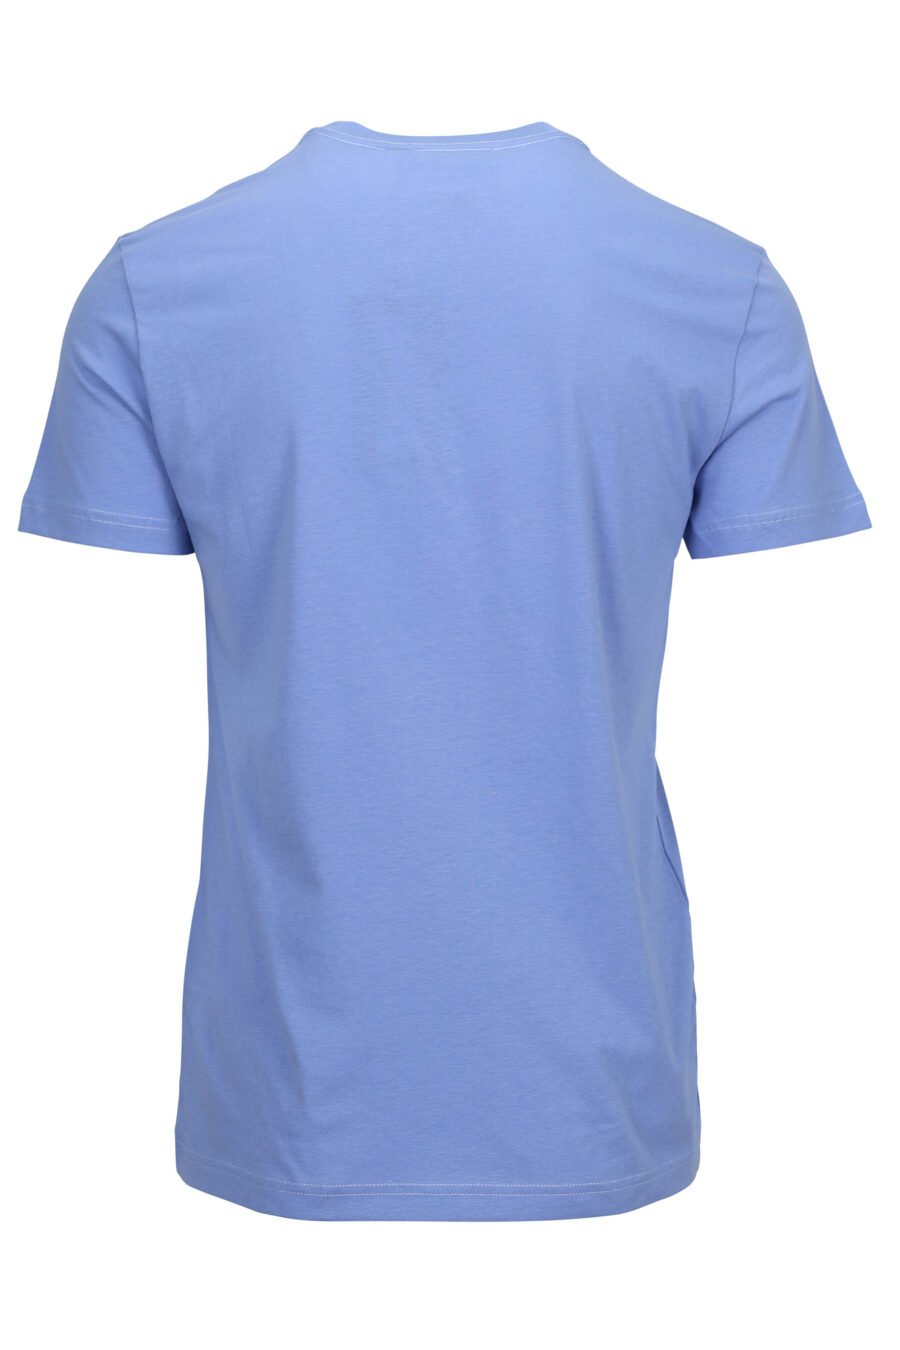 T-shirt azul clara com mini-logotipo circular brilhante - 8052019597455 1